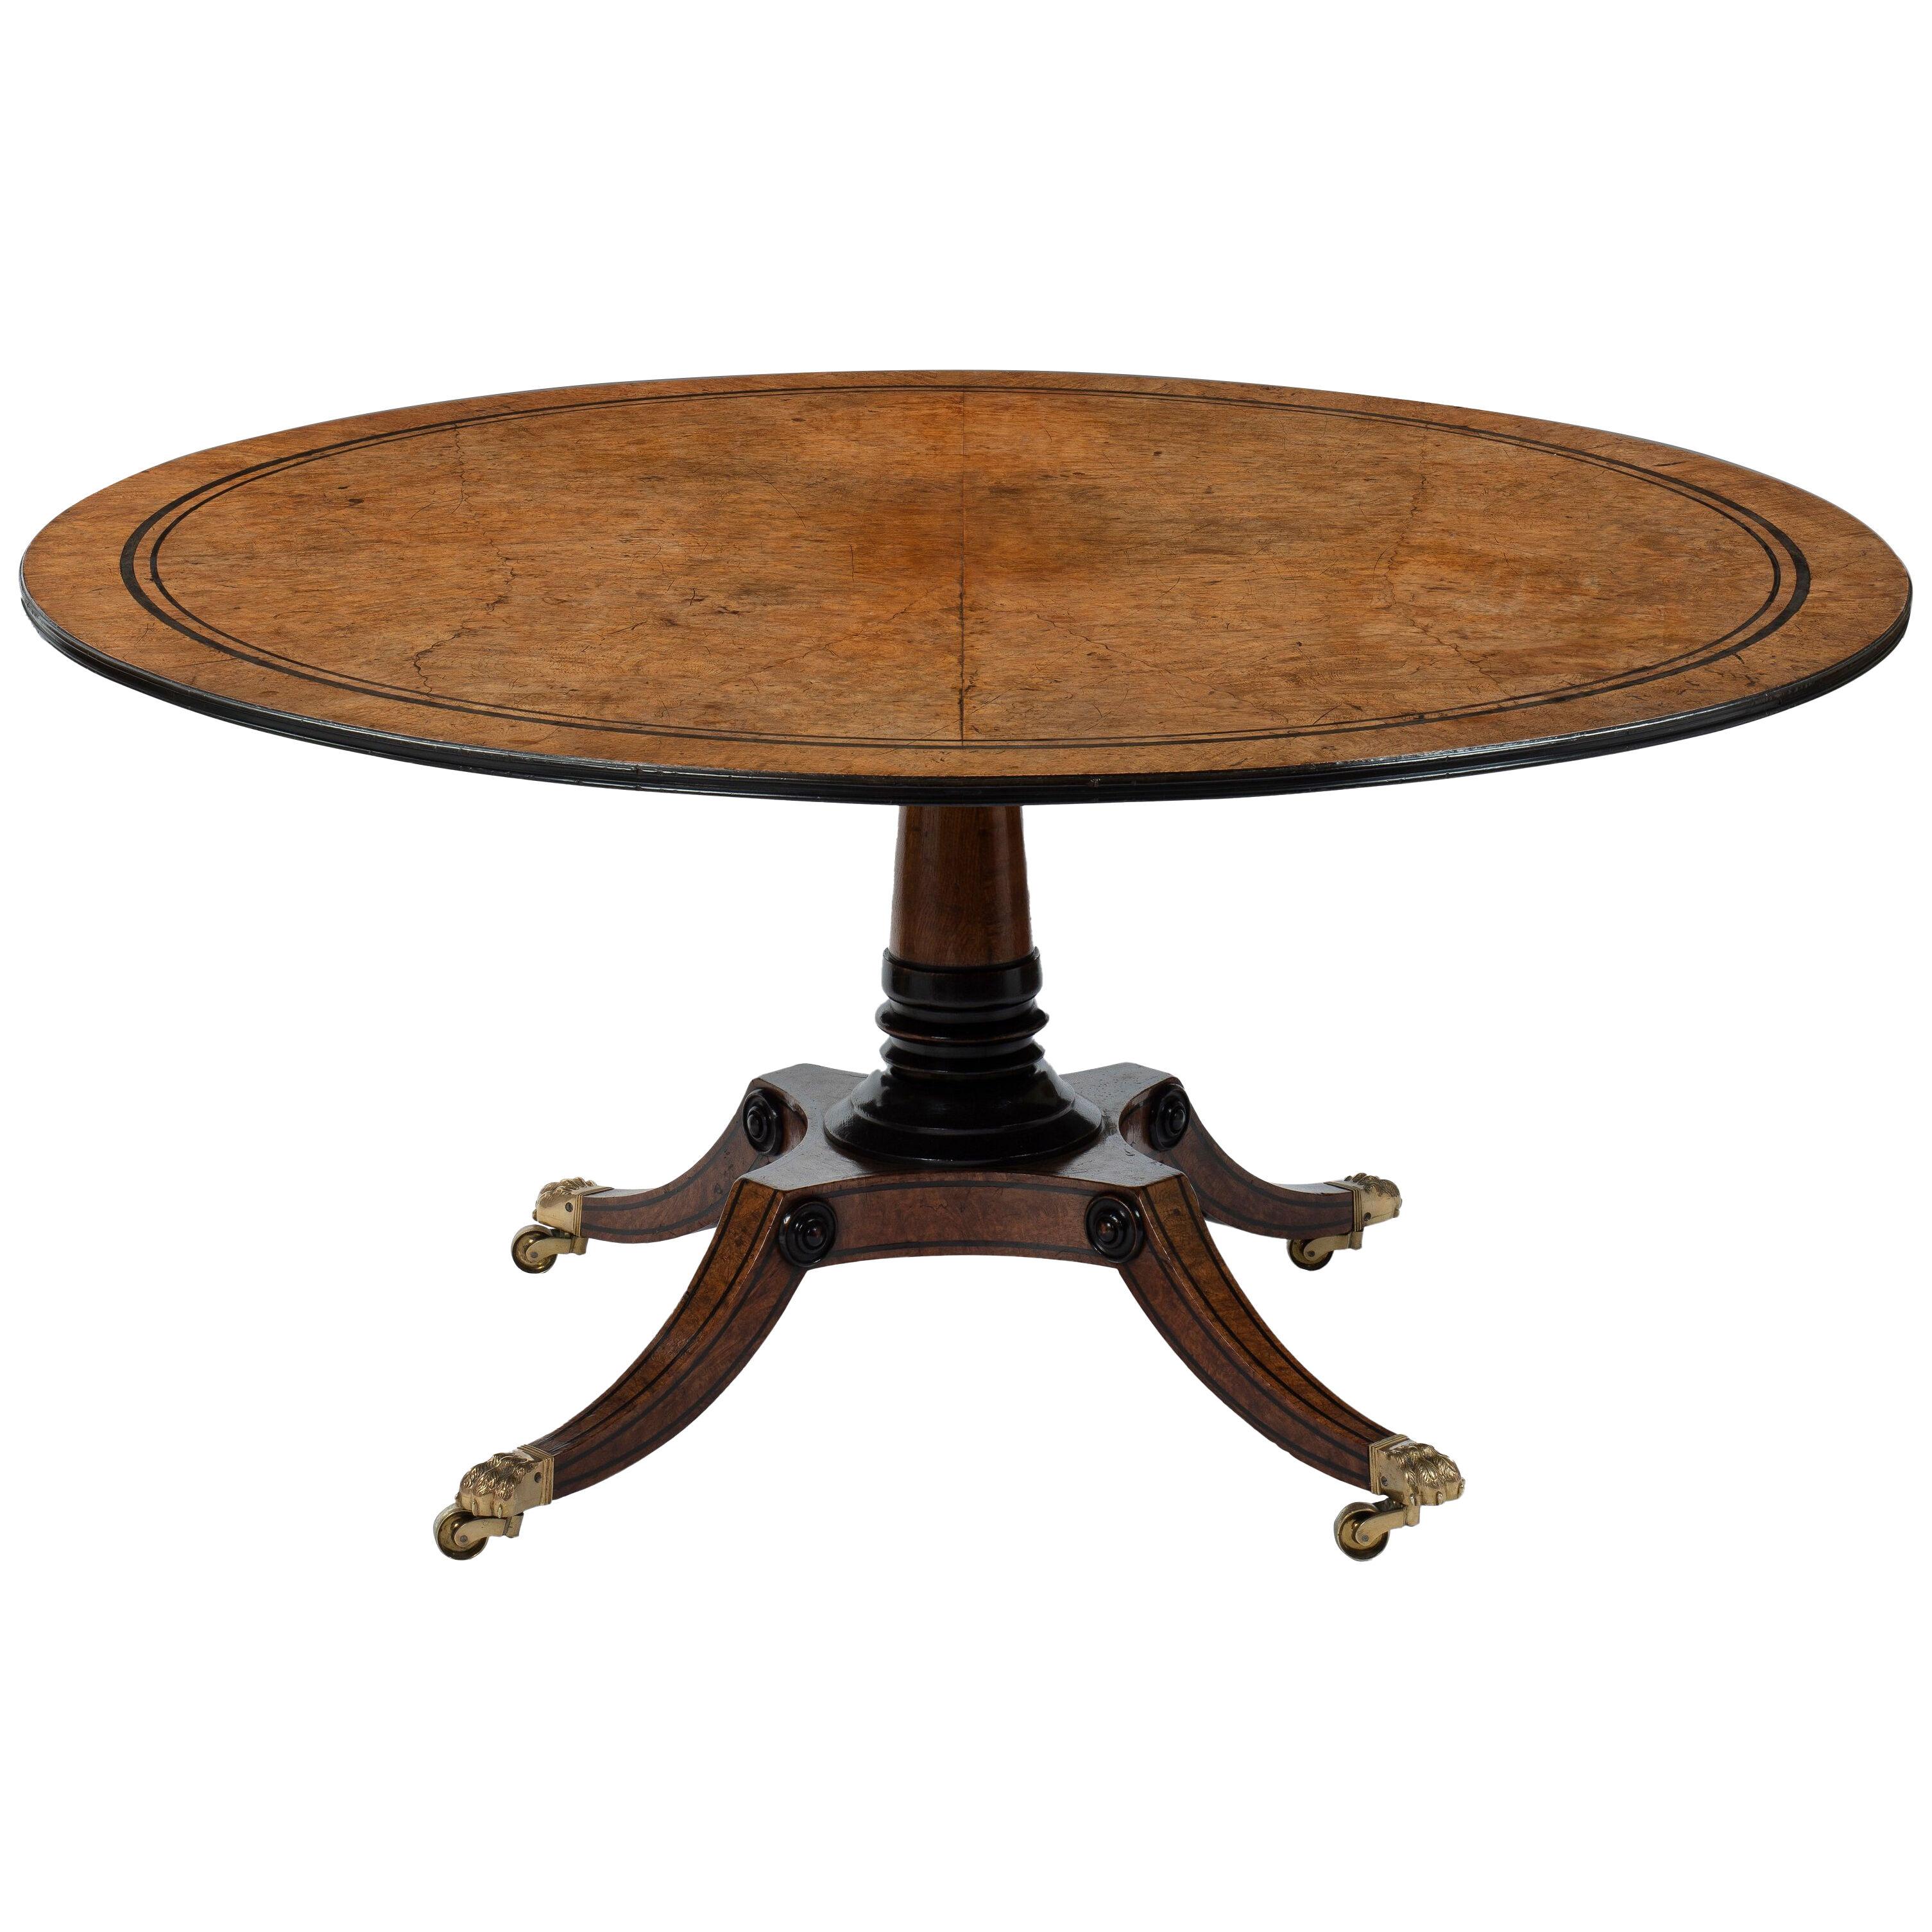 Regency Pollard Oak Centre Table attributed to George Bullock (c. 1782-1818)